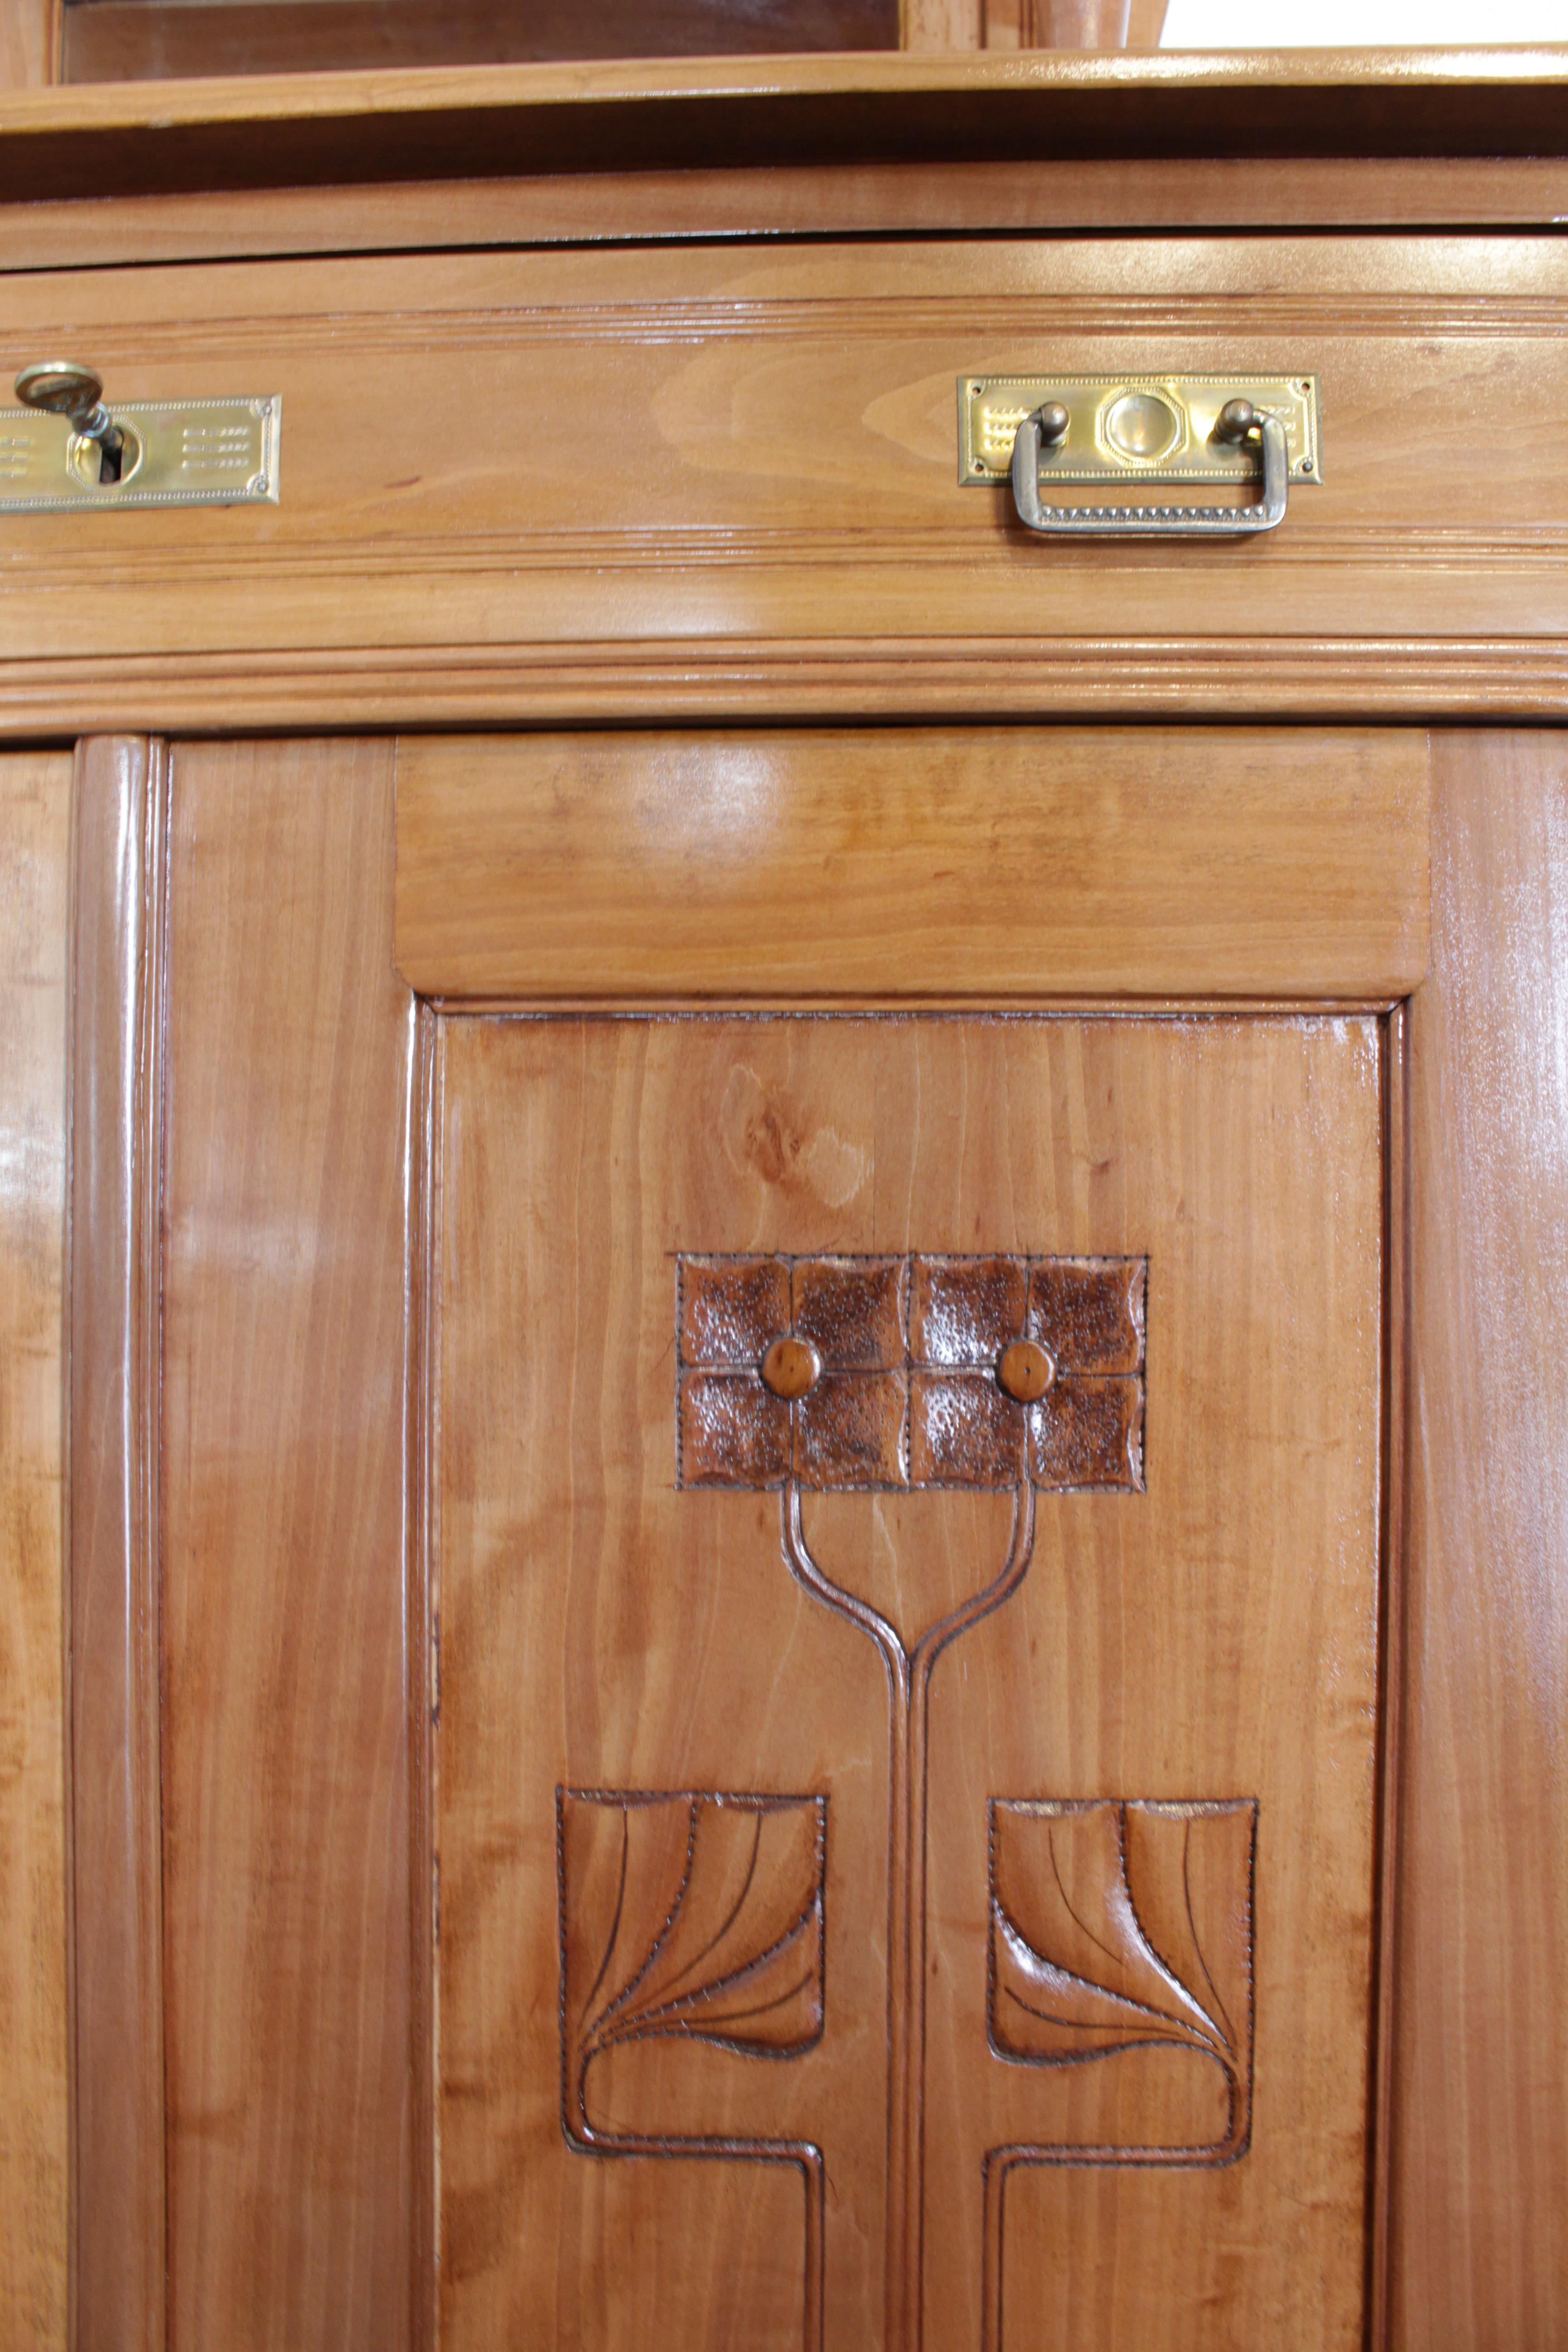 Late 19th Century Art Nouveau Plum-Wood Cabinet or Vertiko (Poliert)